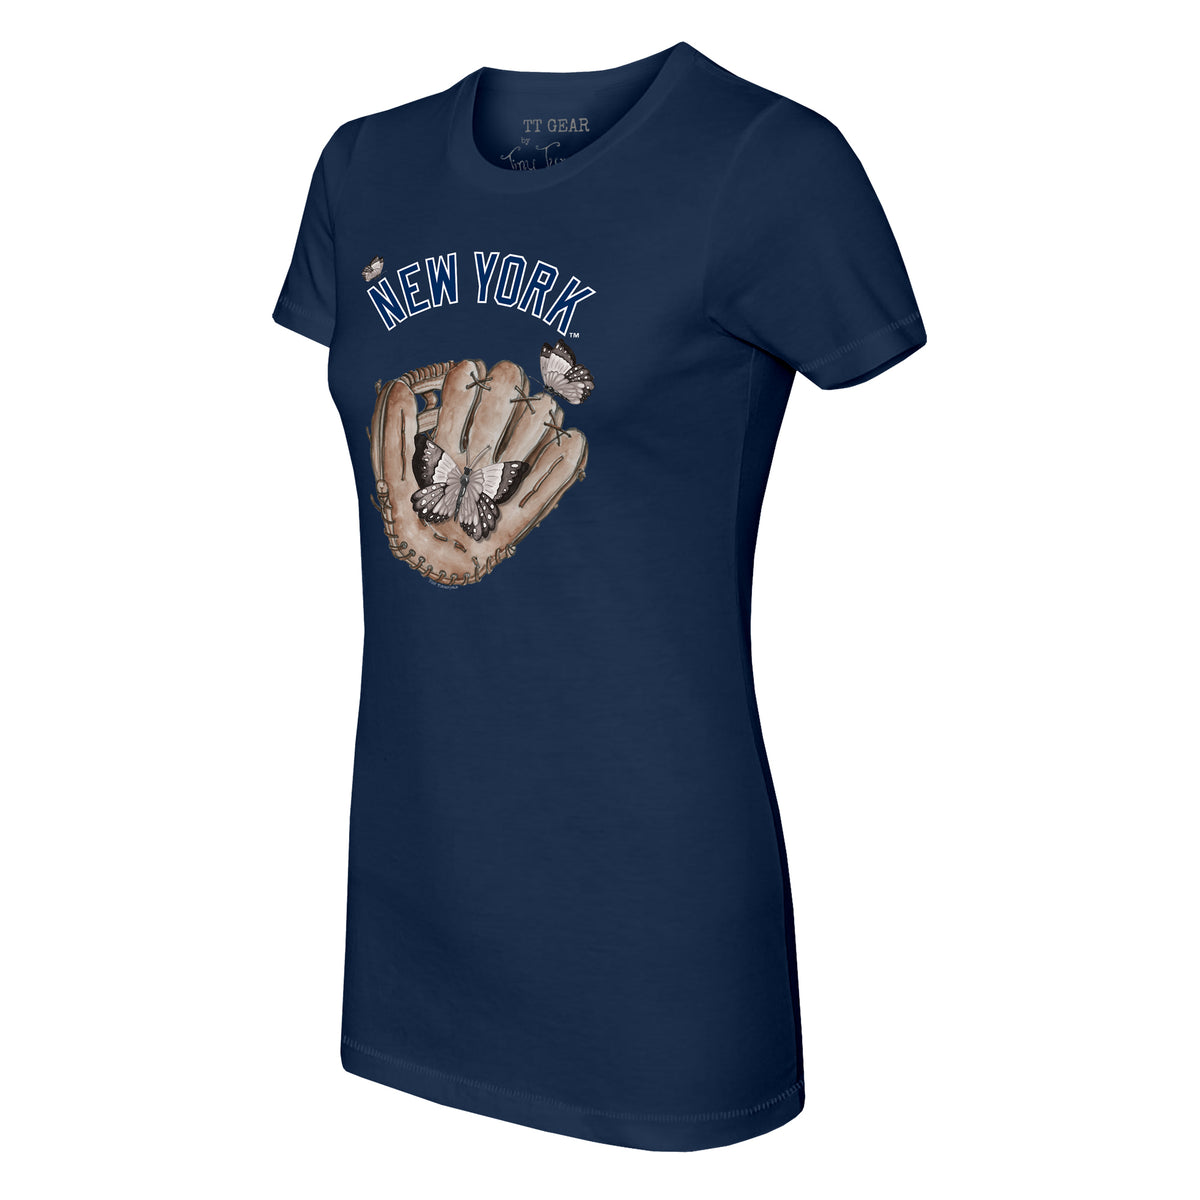 New York Yankees Butterfly Glove Tee Shirt